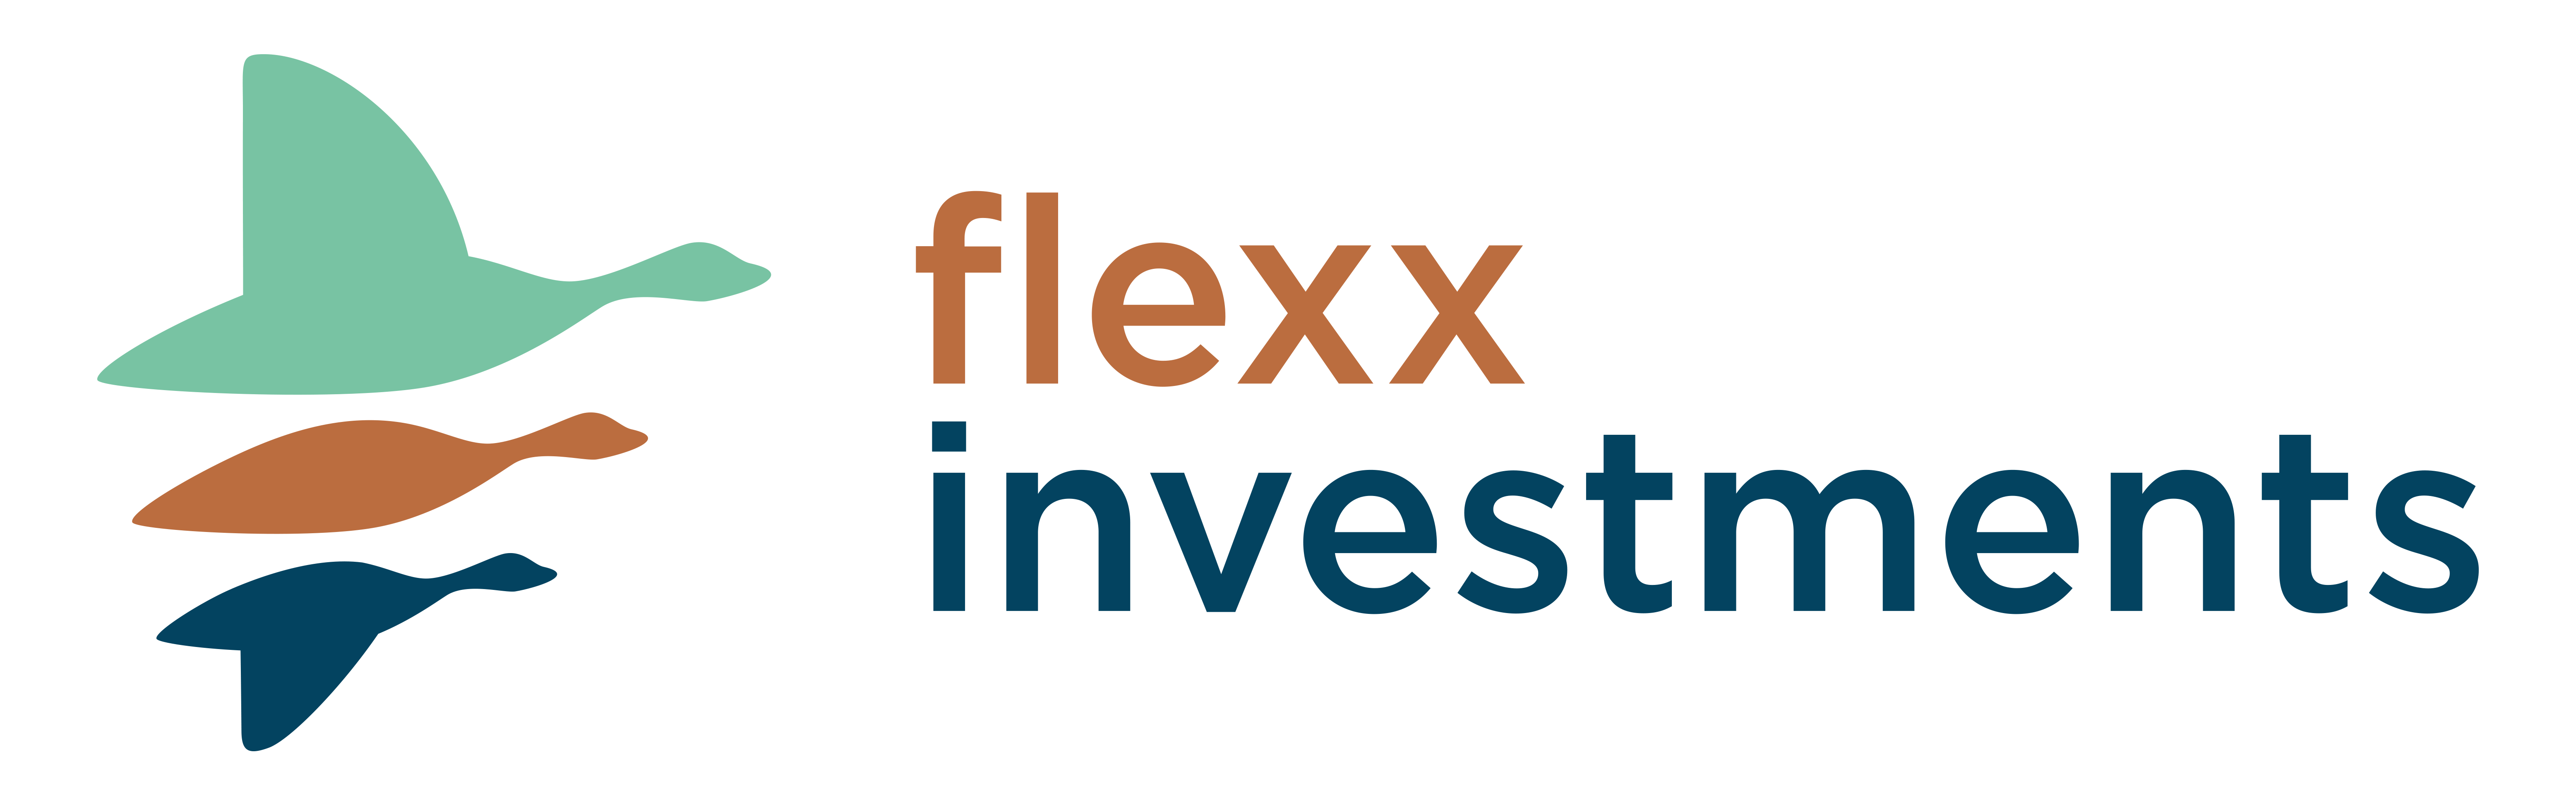 Flexx Investments